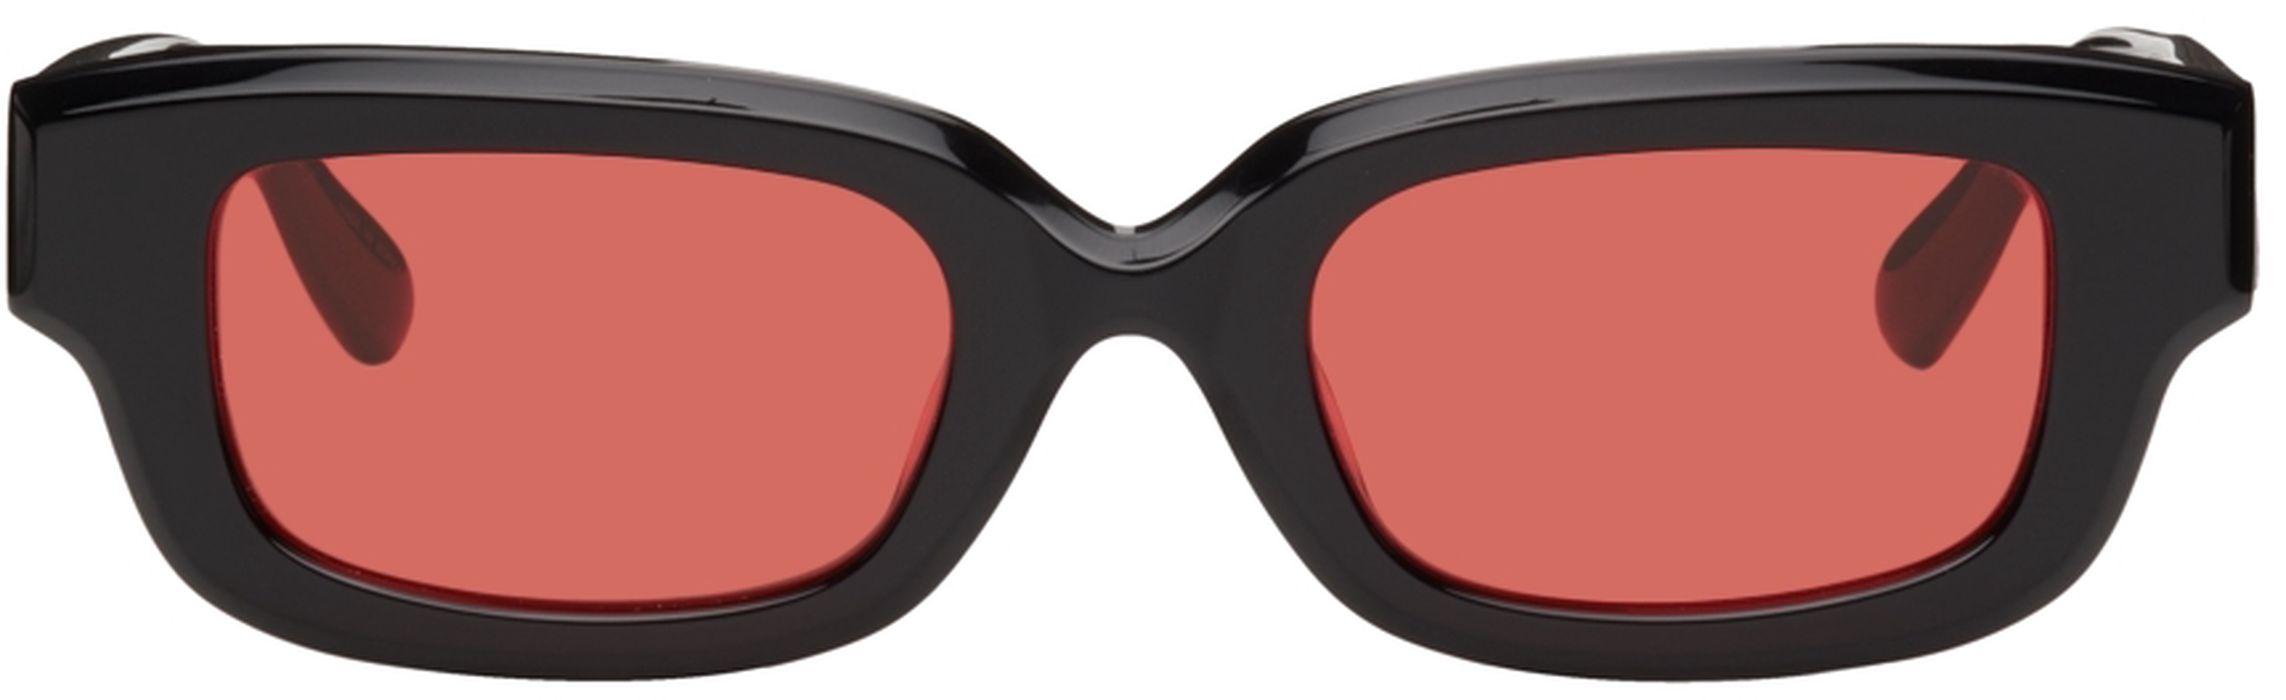 PROJEKT PRODUKT Black & Red AUCC2 Sunglasses